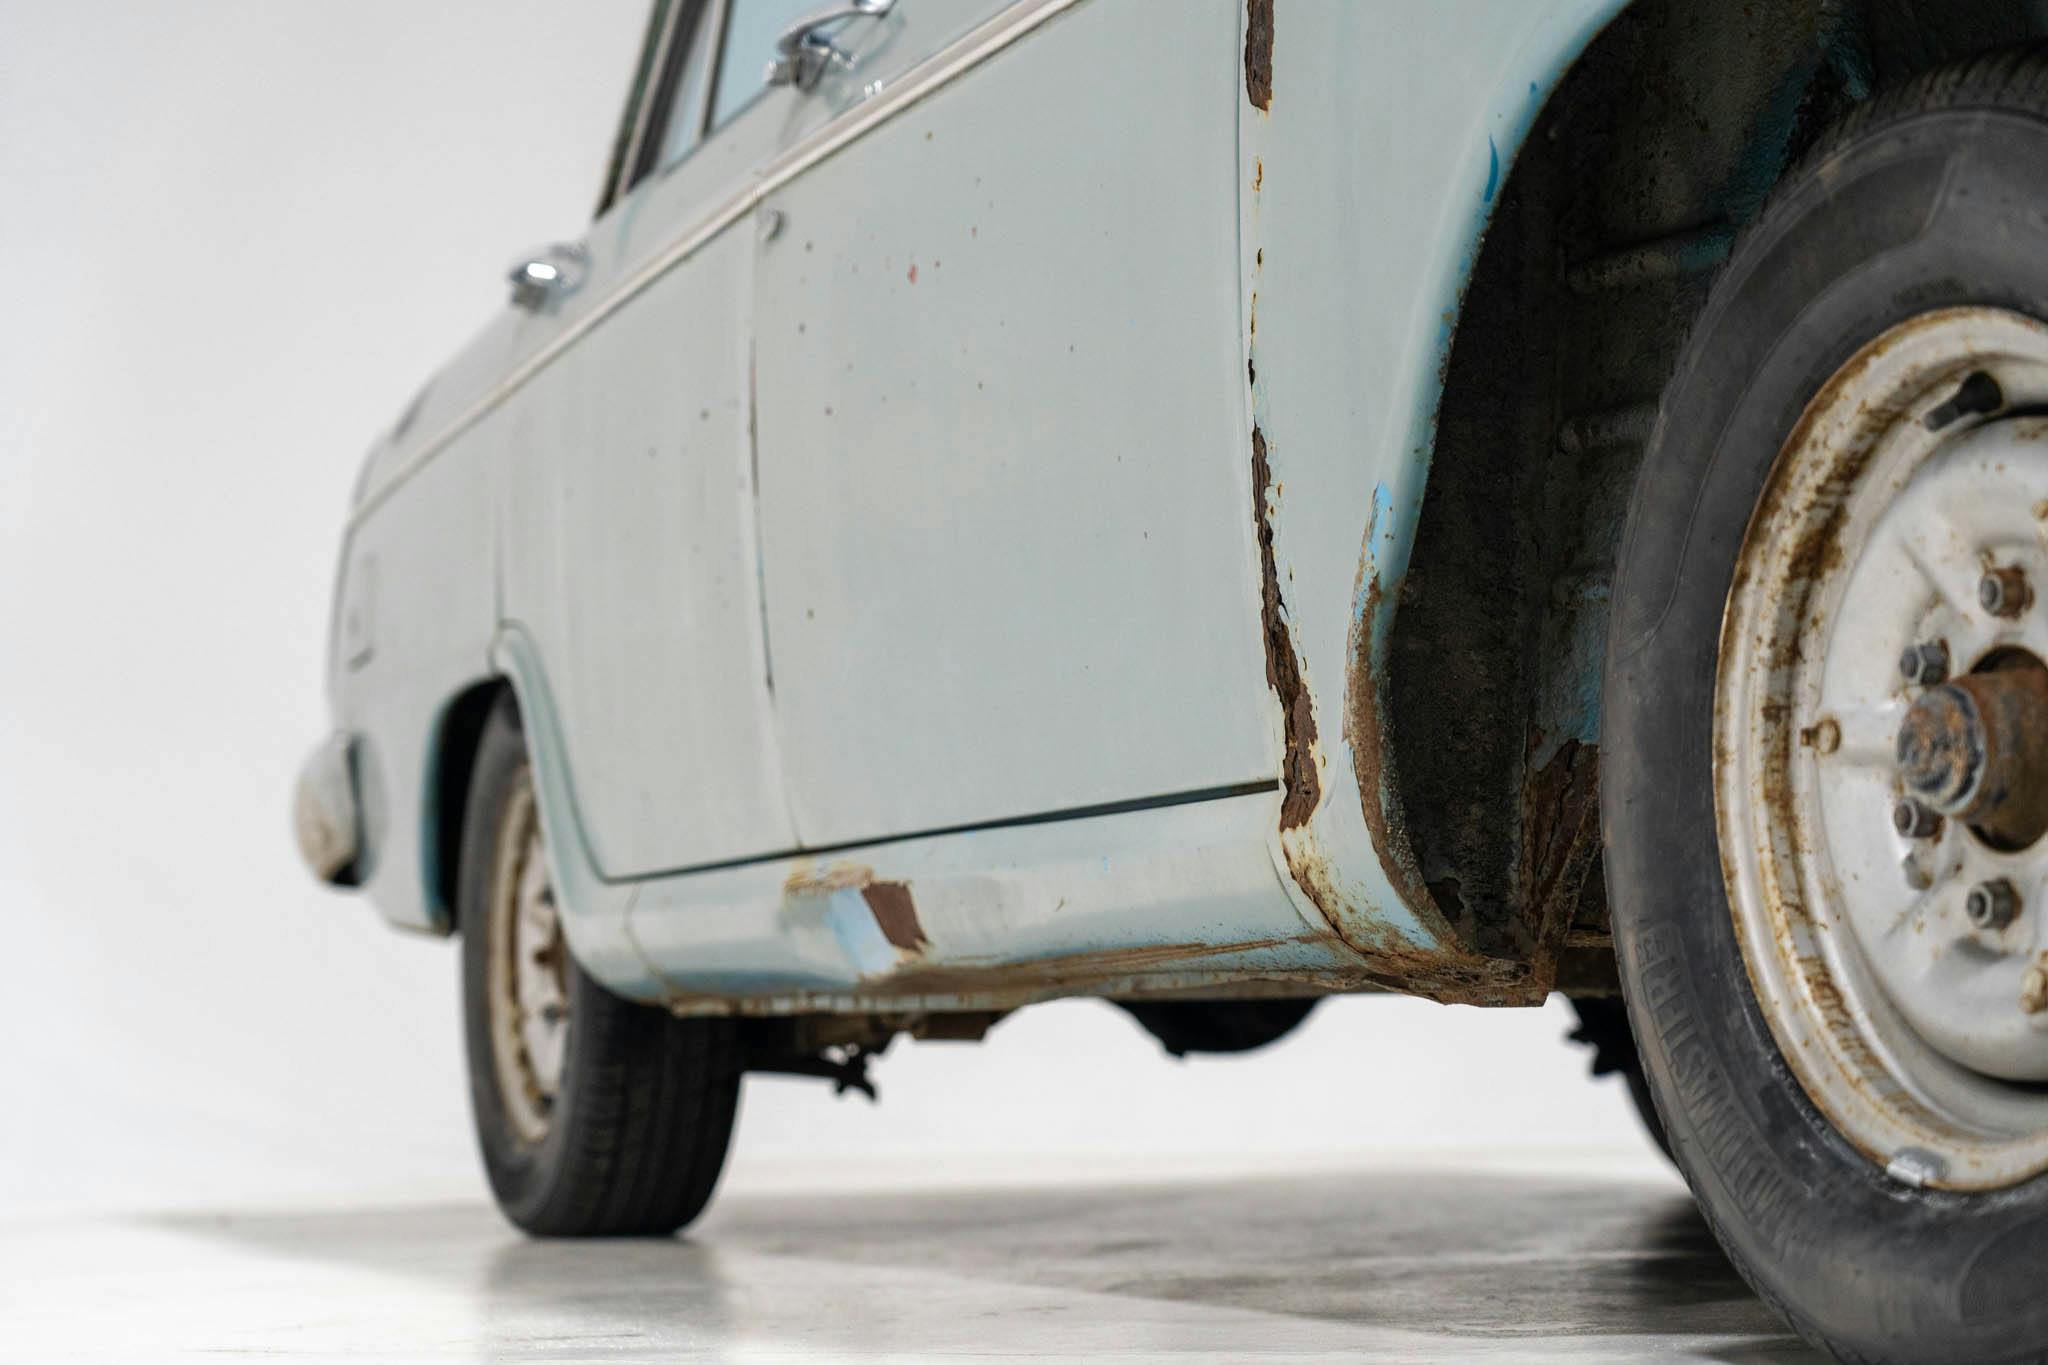 1964 Nissan Cedric unrestored rocker panel